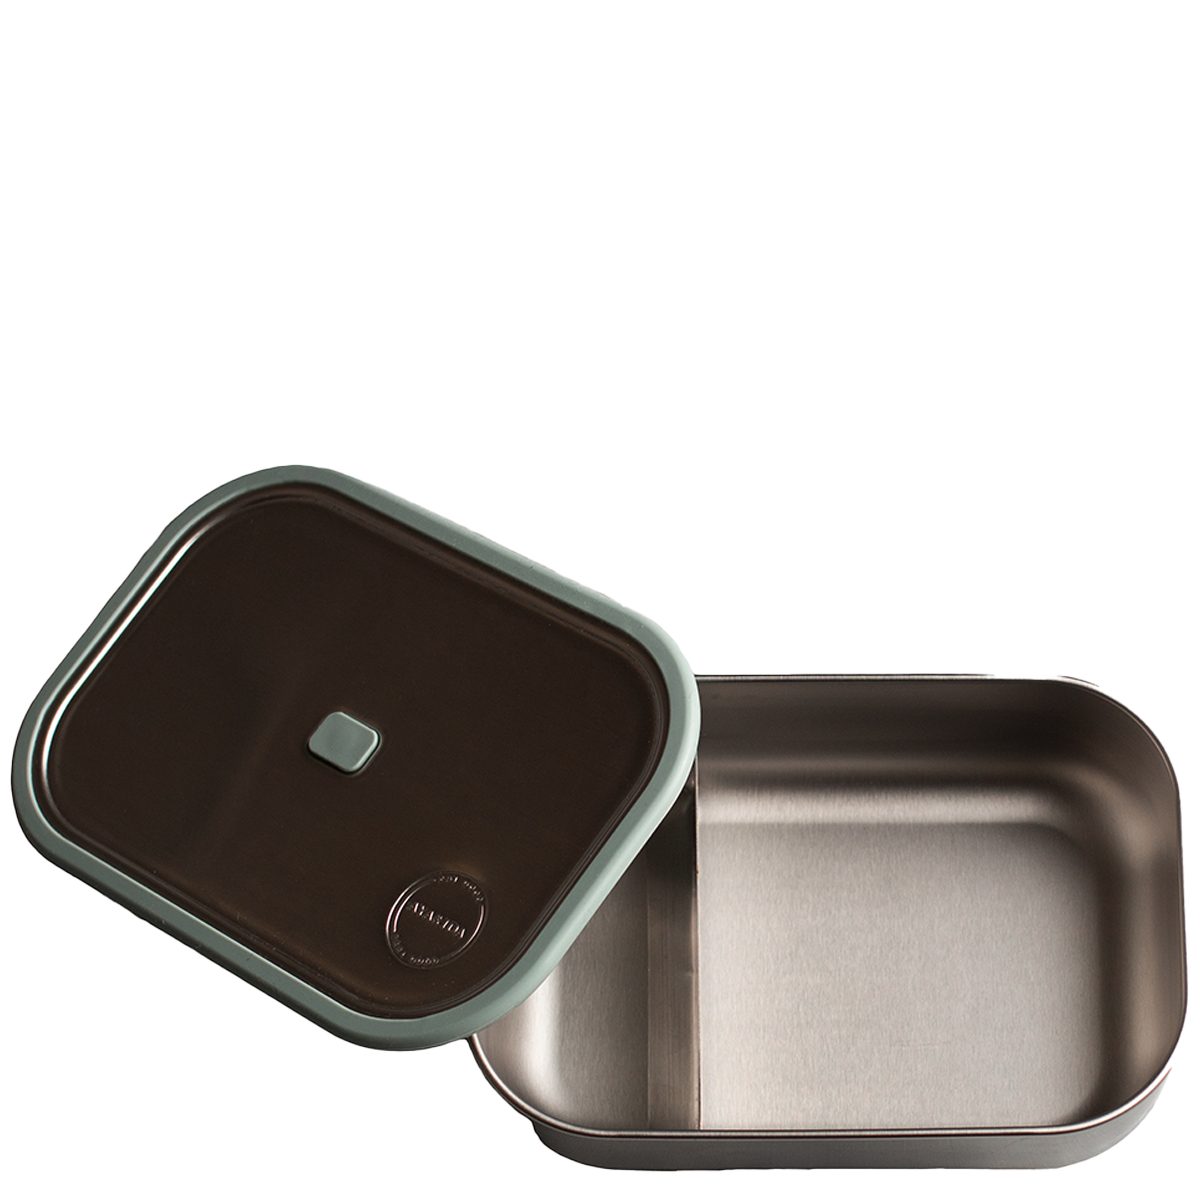 Lunch Box - Mint Green - 1000ML